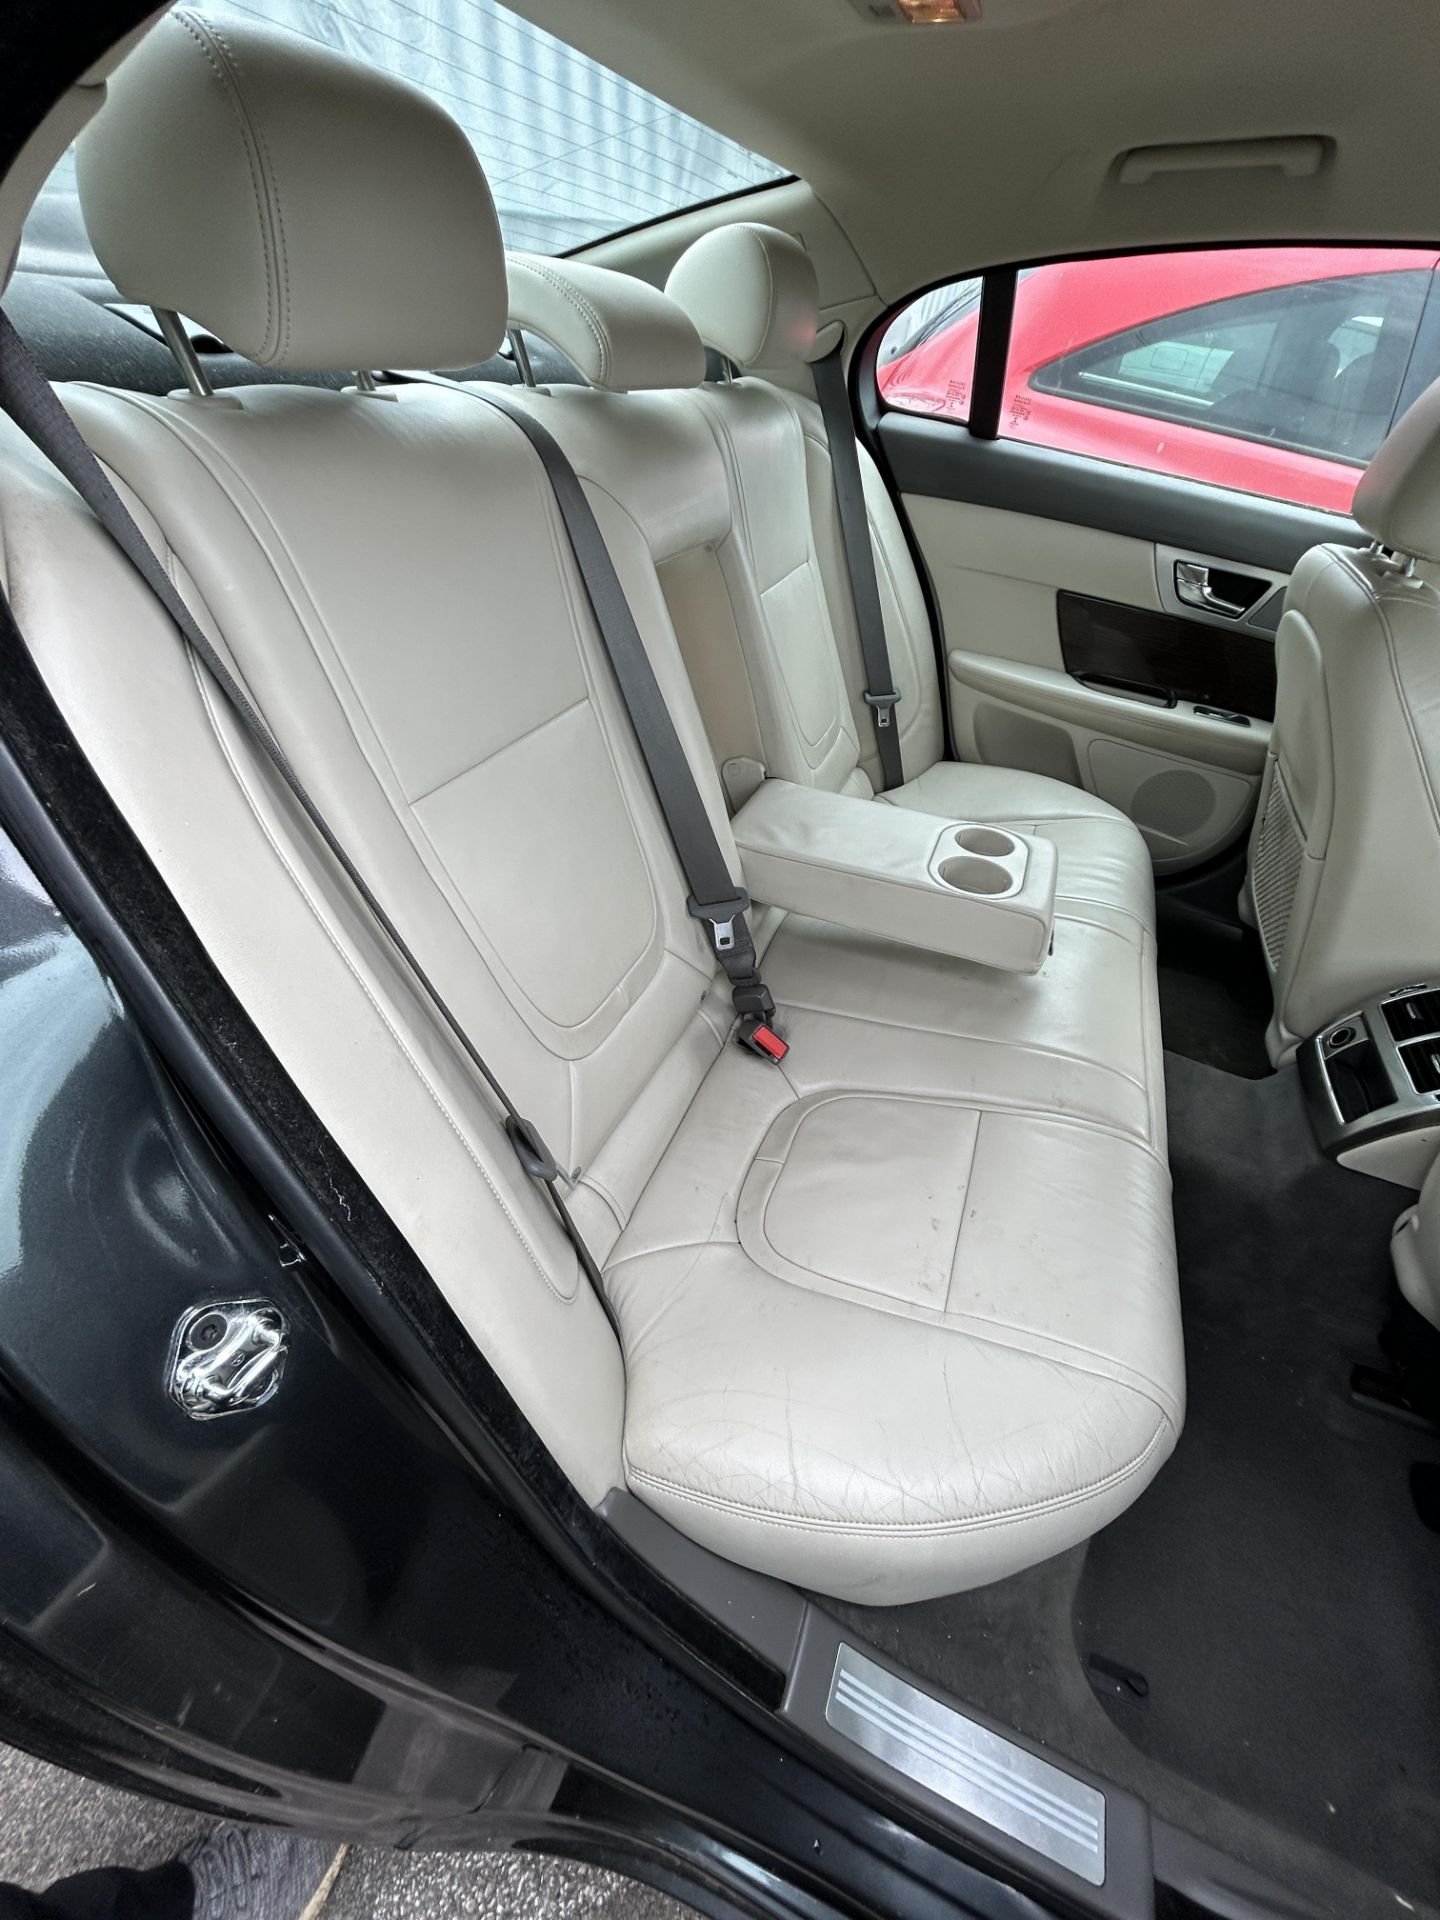 Jaguar XF Premium Luxury D Auto Diesel 4 Door Saloon | PO13 TOH | 165,697 Miles - Image 4 of 9